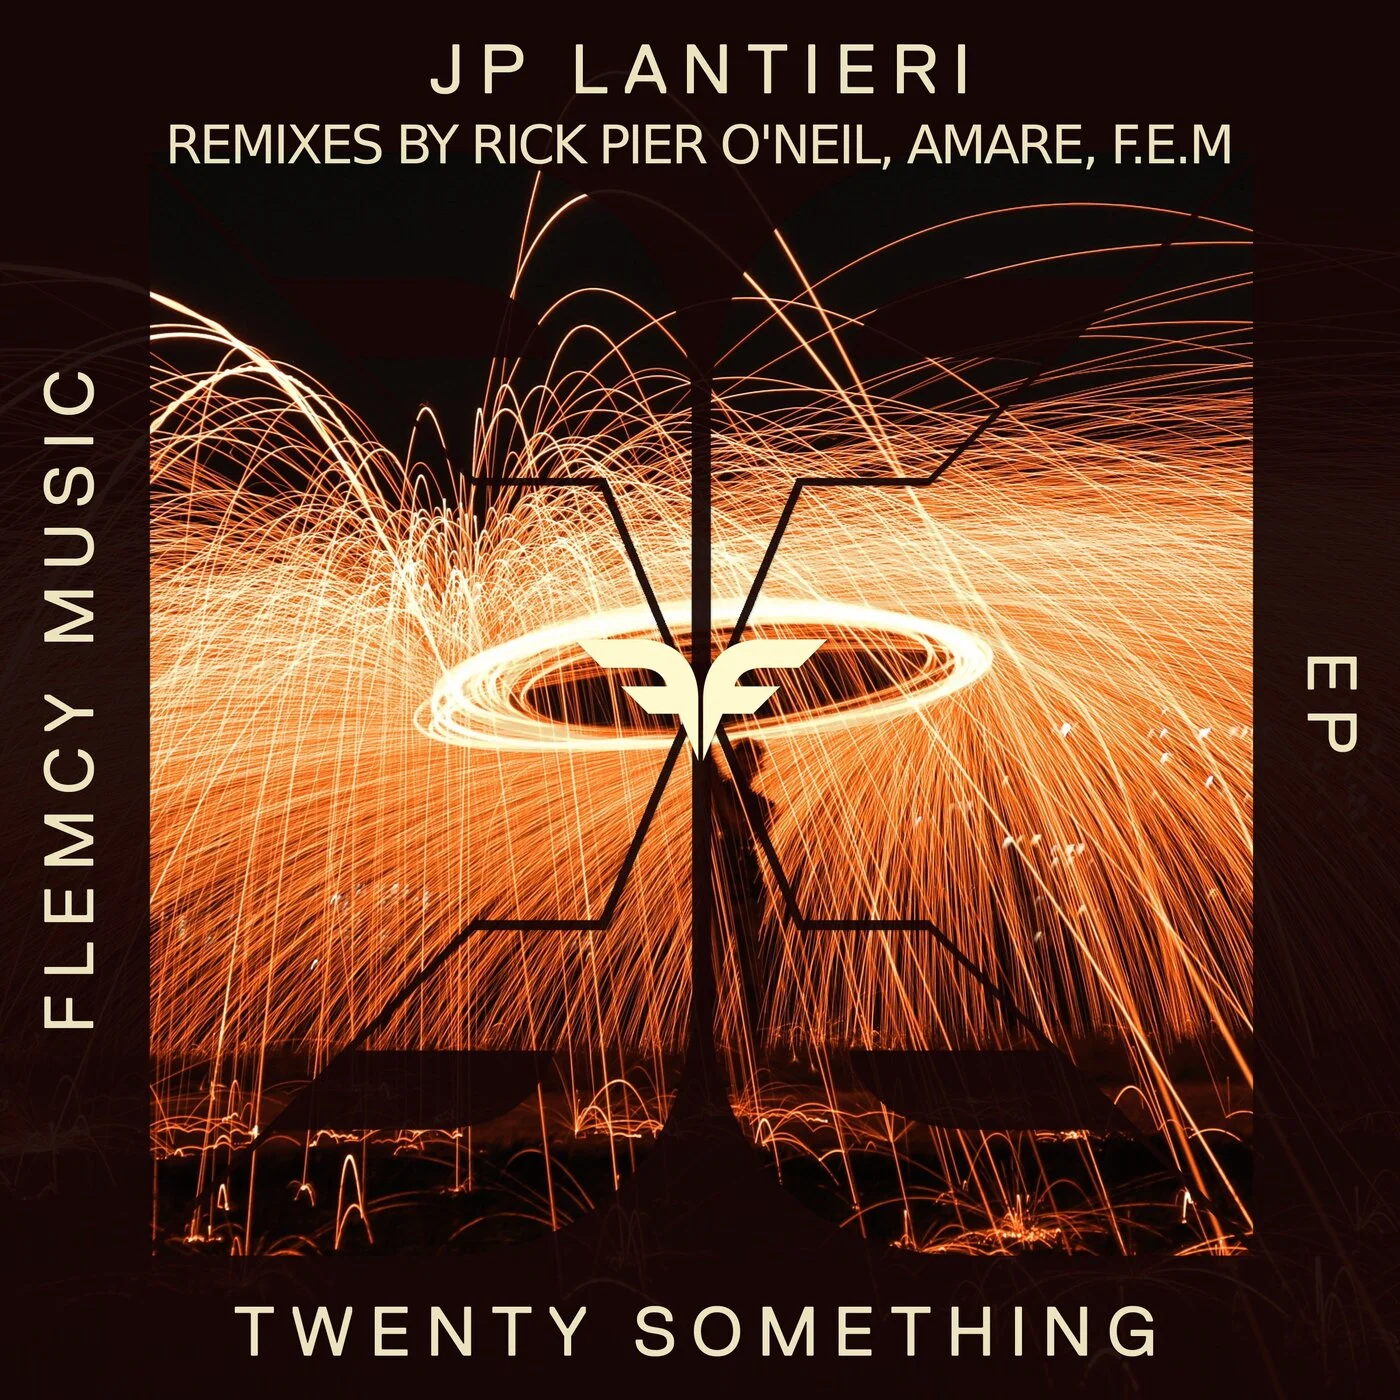 JP Lantieri – Twenty Something (Rick Pier O'Neil Remix)